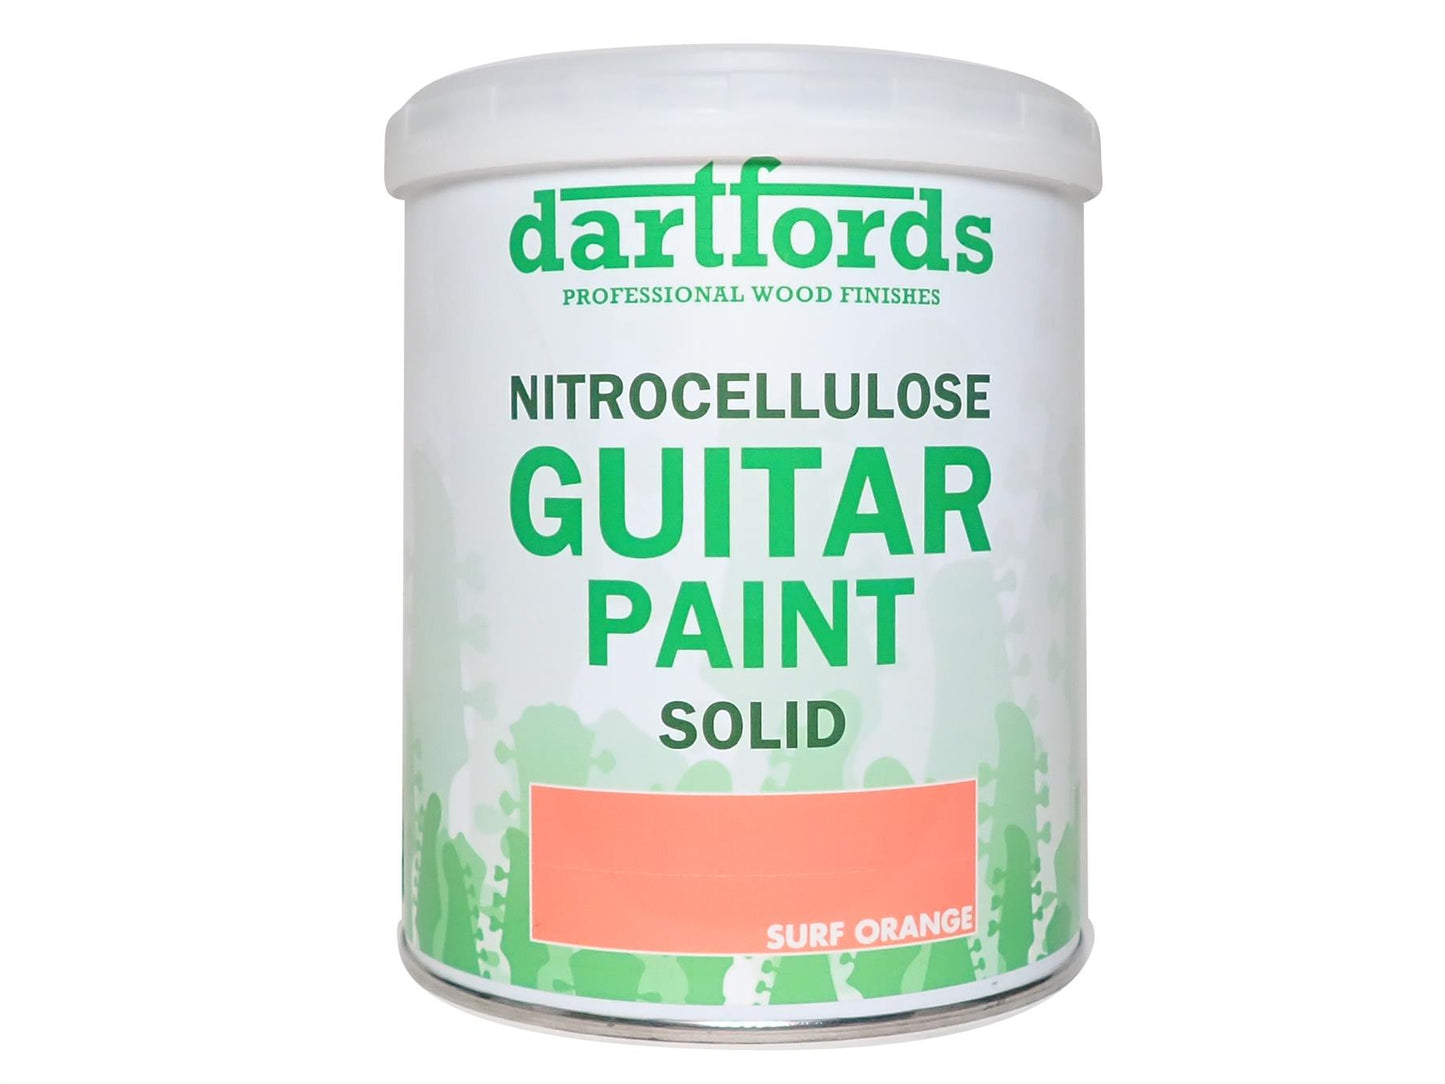 dartfords Surf Orange Nitrocellulose Guitar Paint - 1 litre Tin